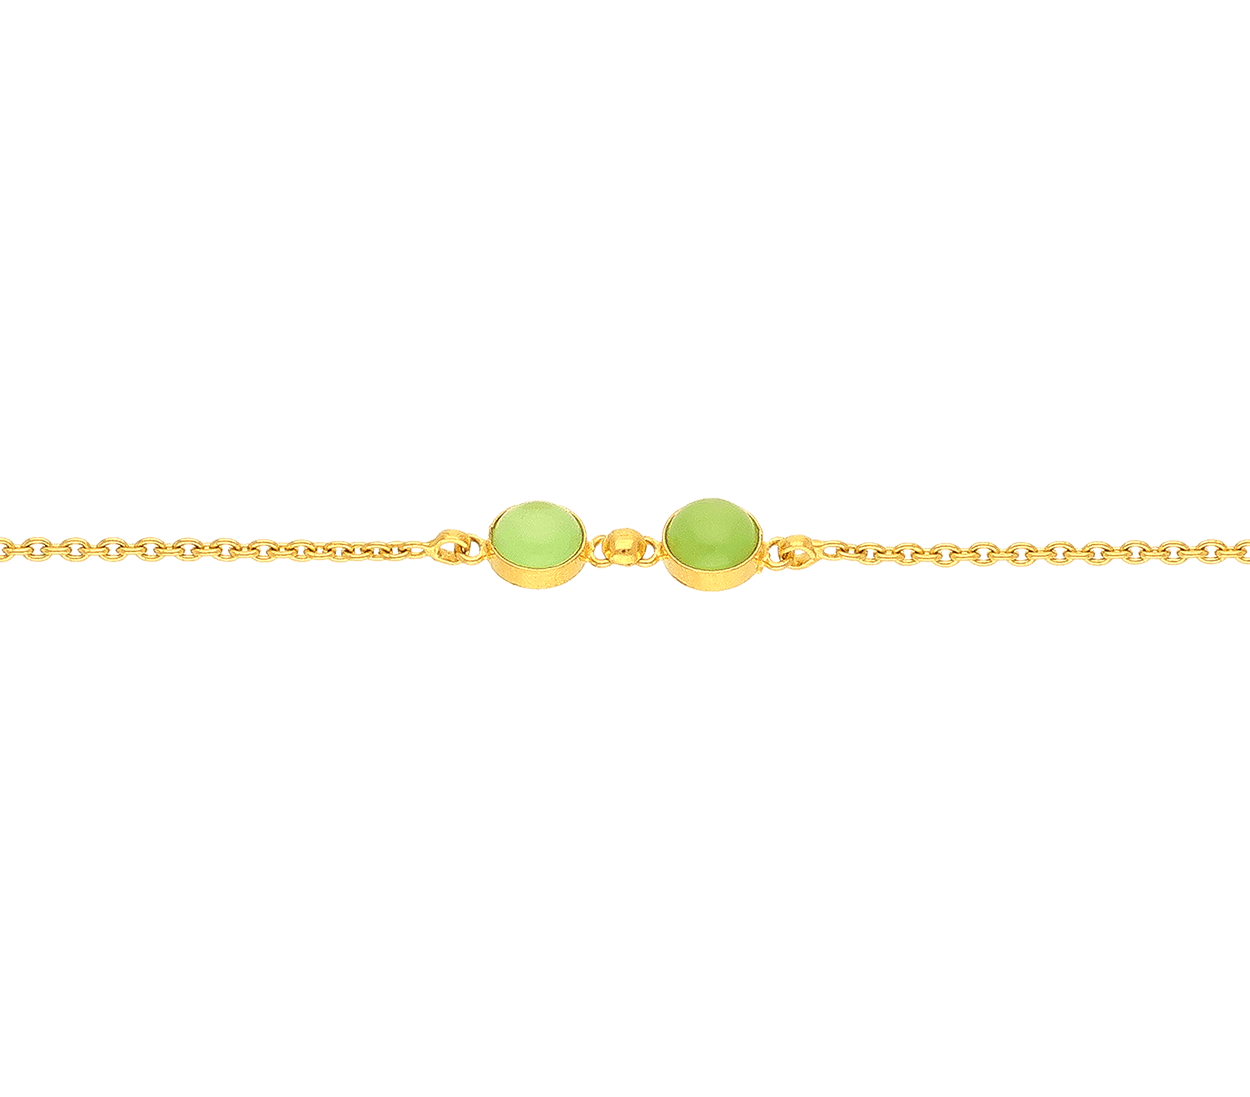 Delicate Design With Diamond Chic Design Gold Plated Bracelet For Lady -  Style A276, गोल्ड प्लेटेड ब्रेसलेट - Soni Fashion, Rajkot | ID:  2852298912833